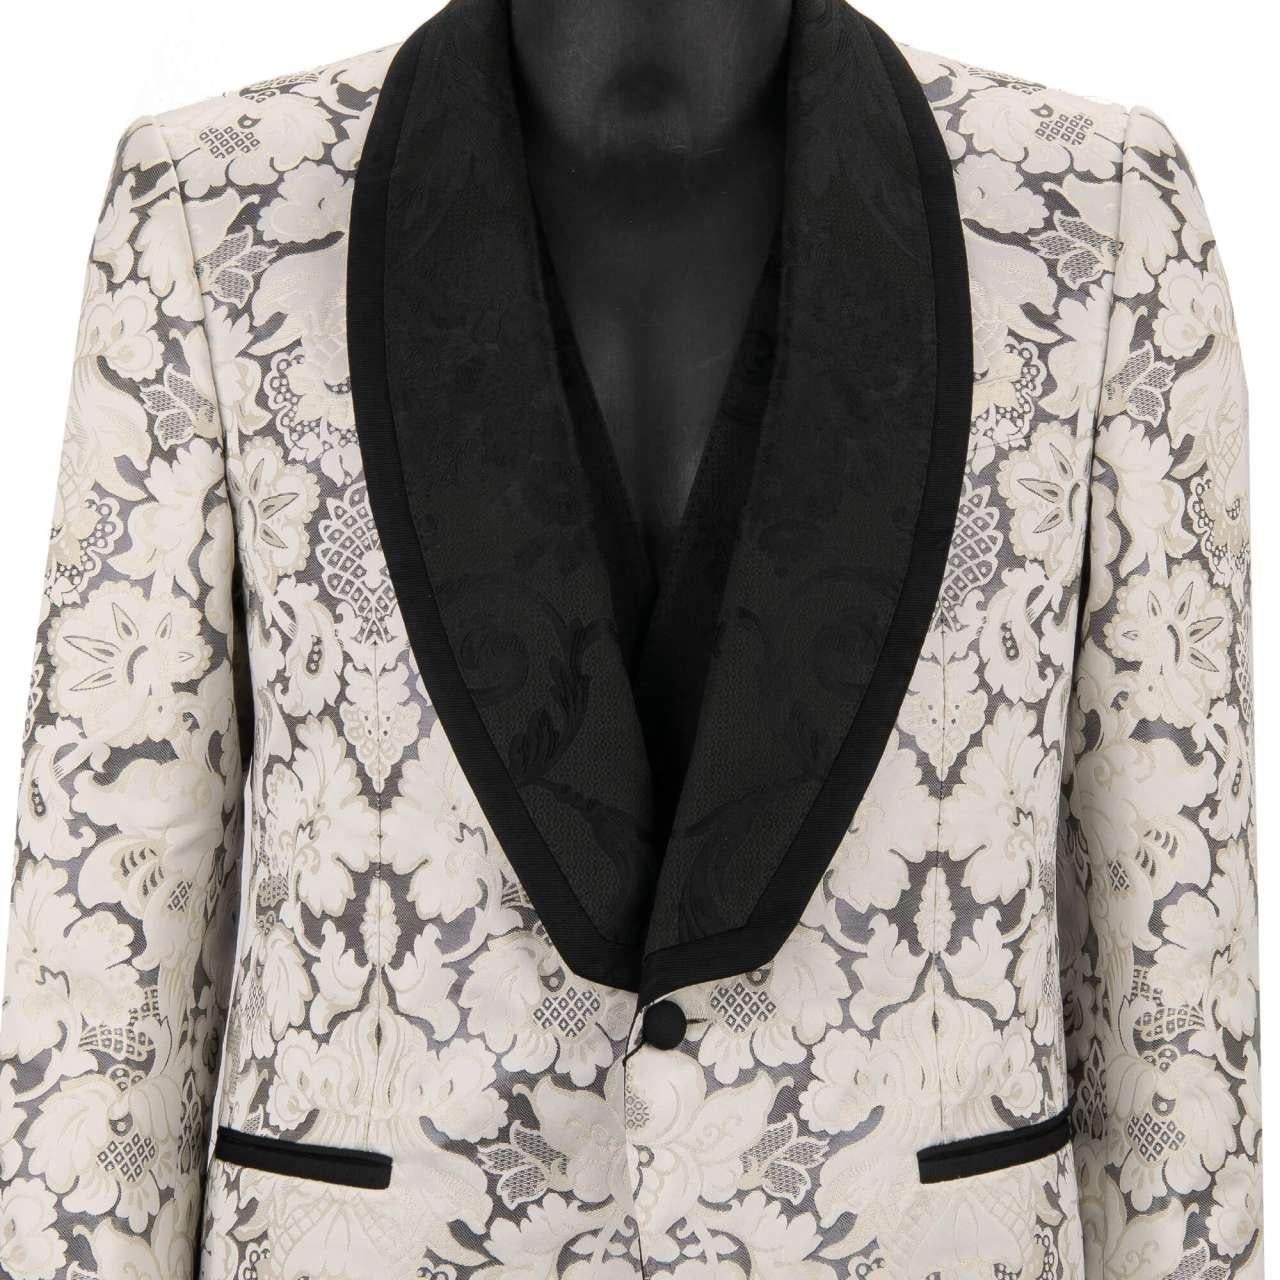 D&G Baroque 3 Piece Jacquard Suit Jacket Waistcoat MARTINI White Black 54 For Sale 5